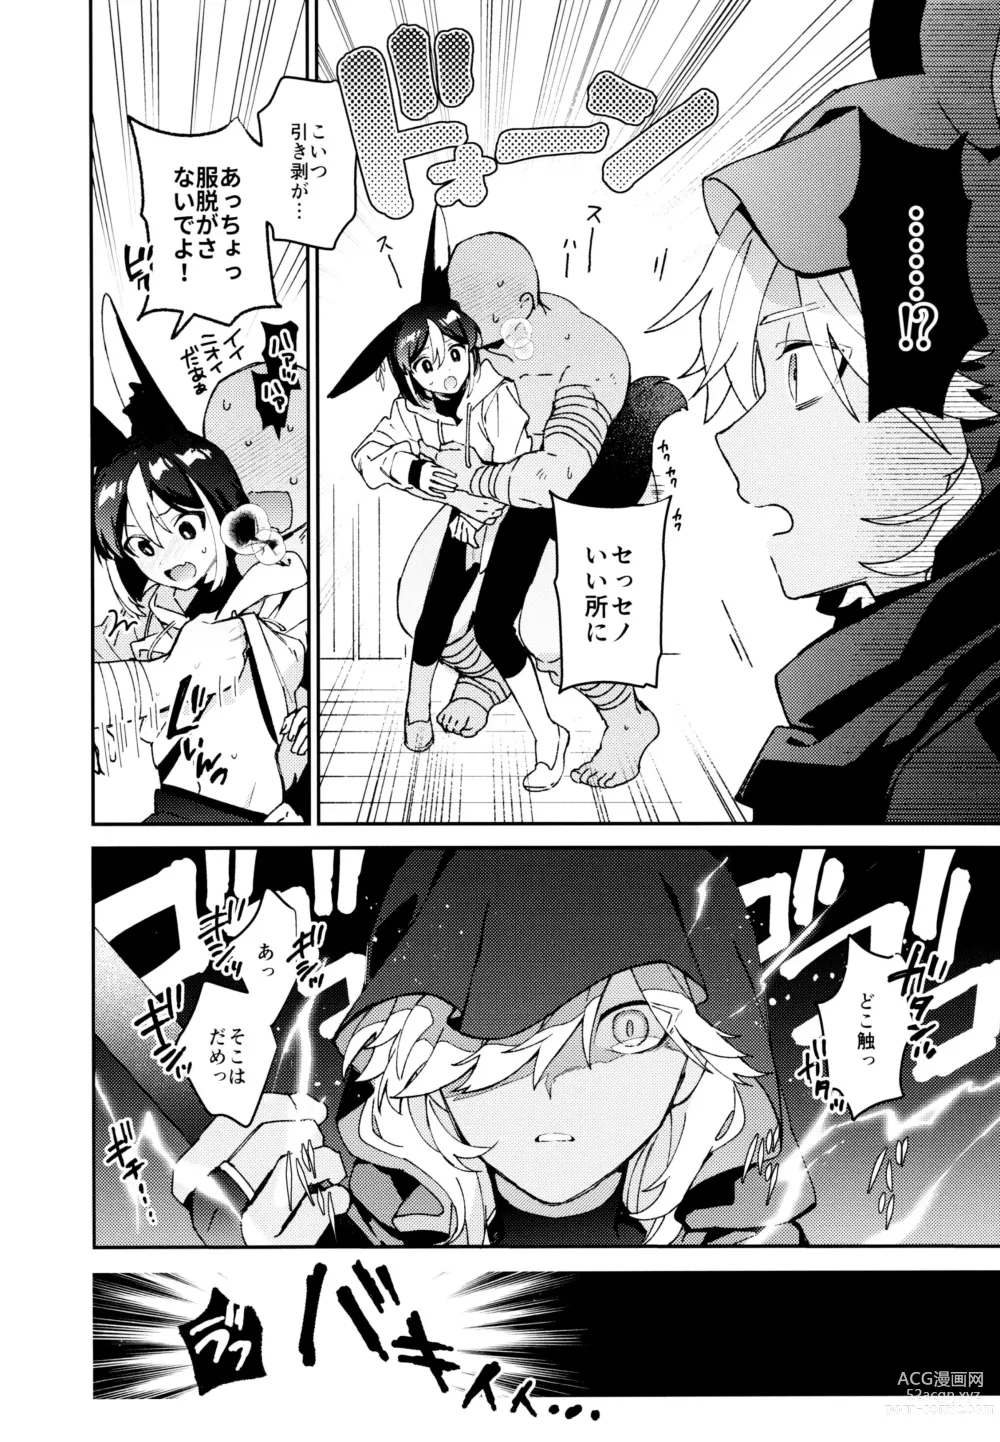 Page 6 of doujinshi ORE:CN